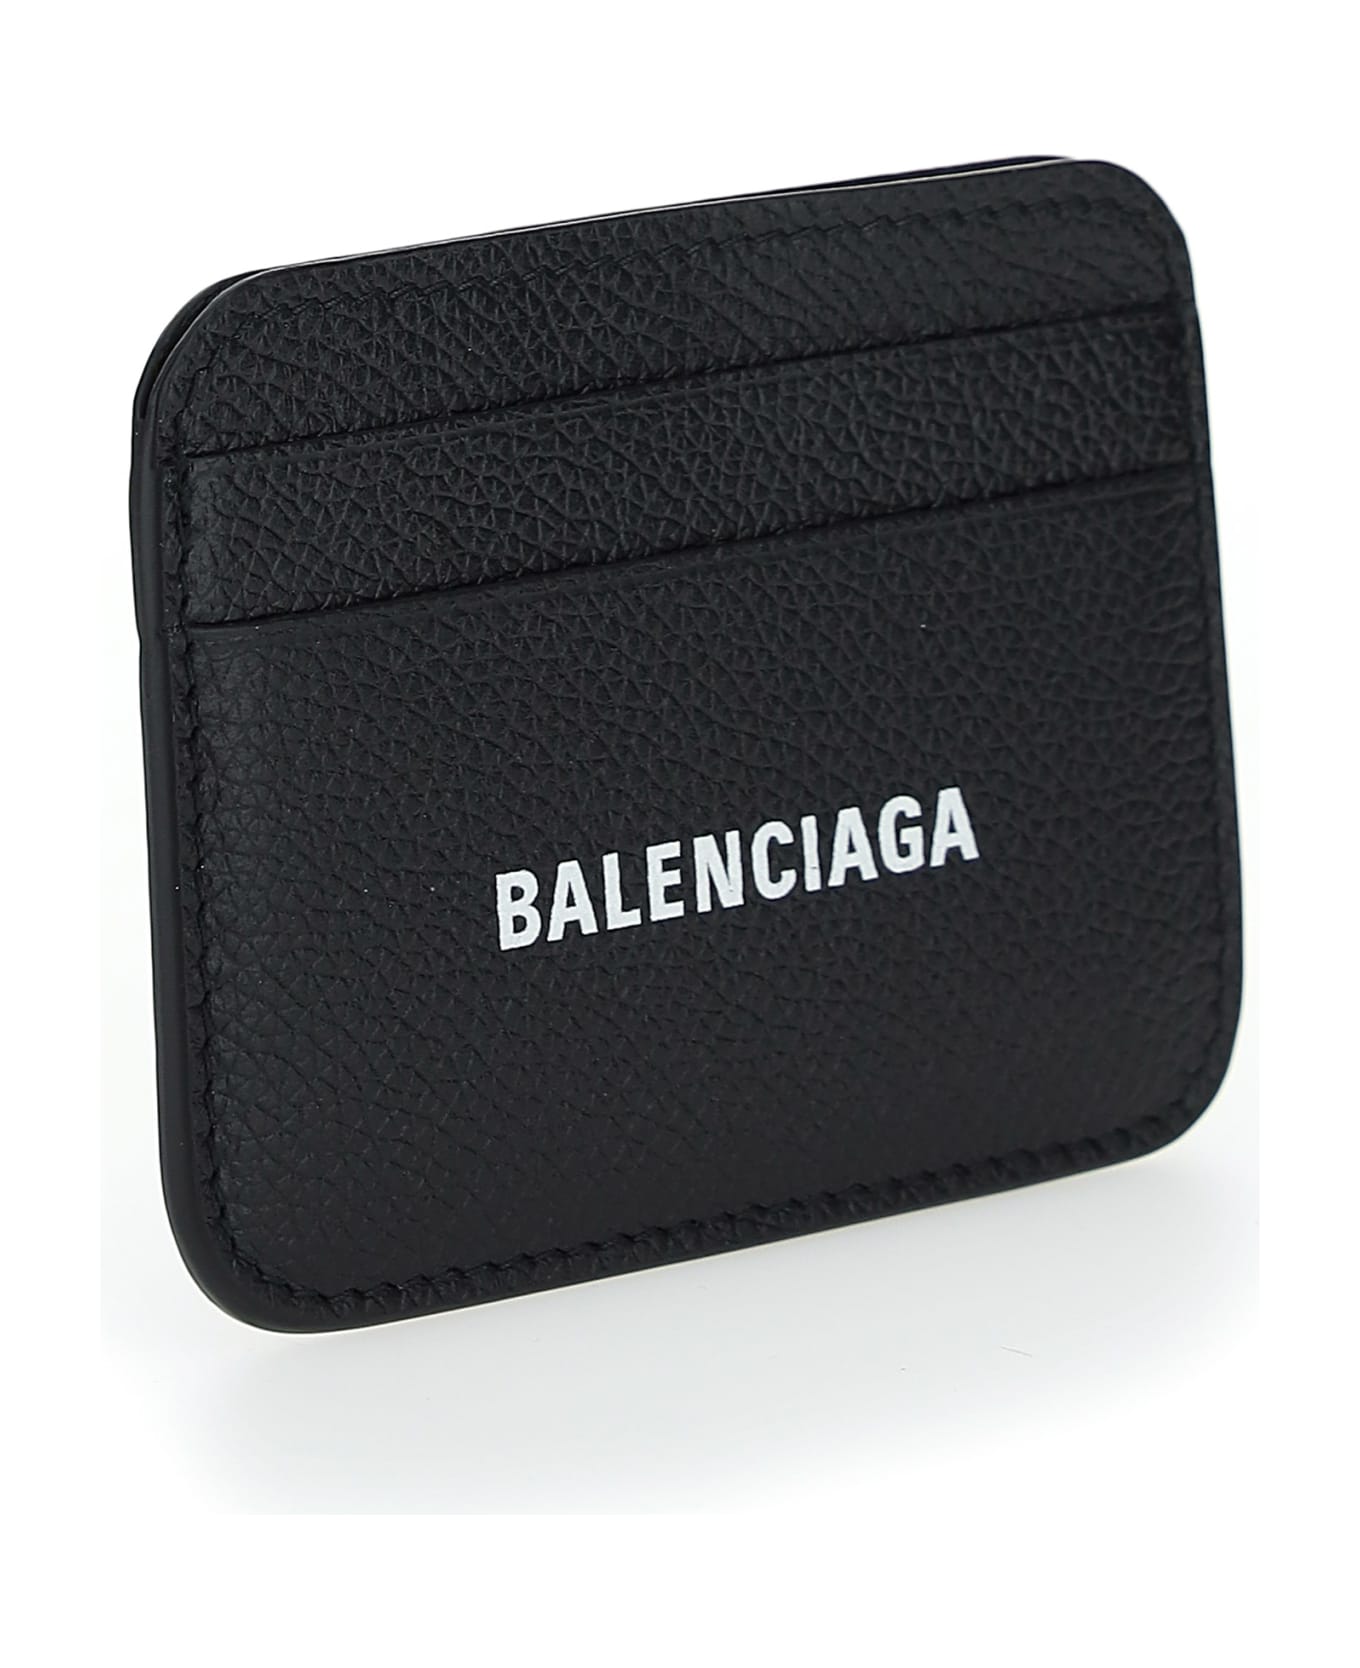 Balenciaga Card Holder - Black/l White